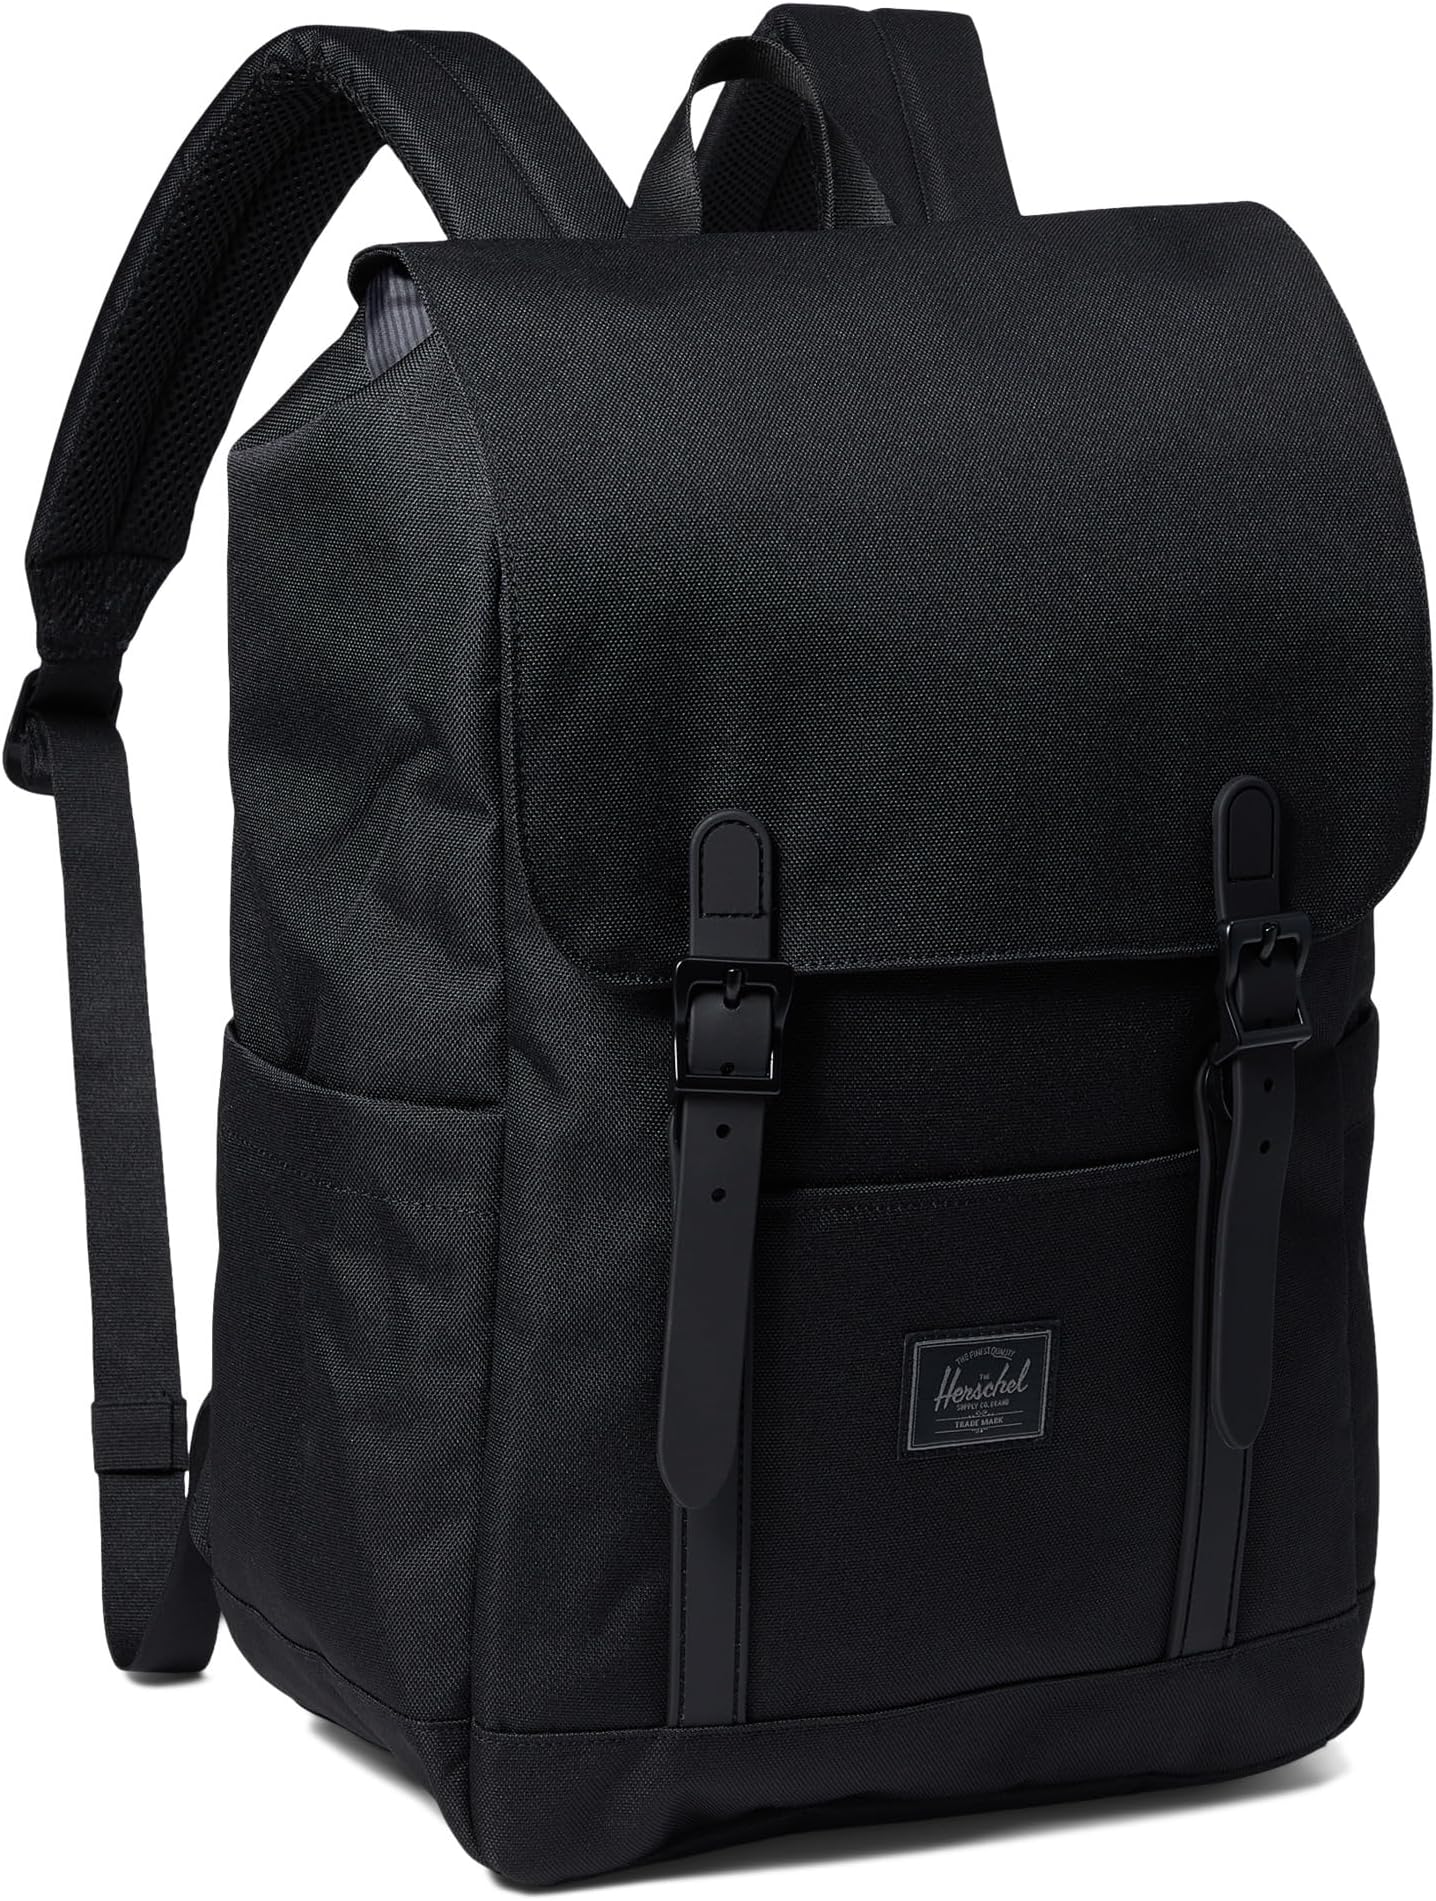 Рюкзак Retreat Small Backpack Herschel Supply Co., черный